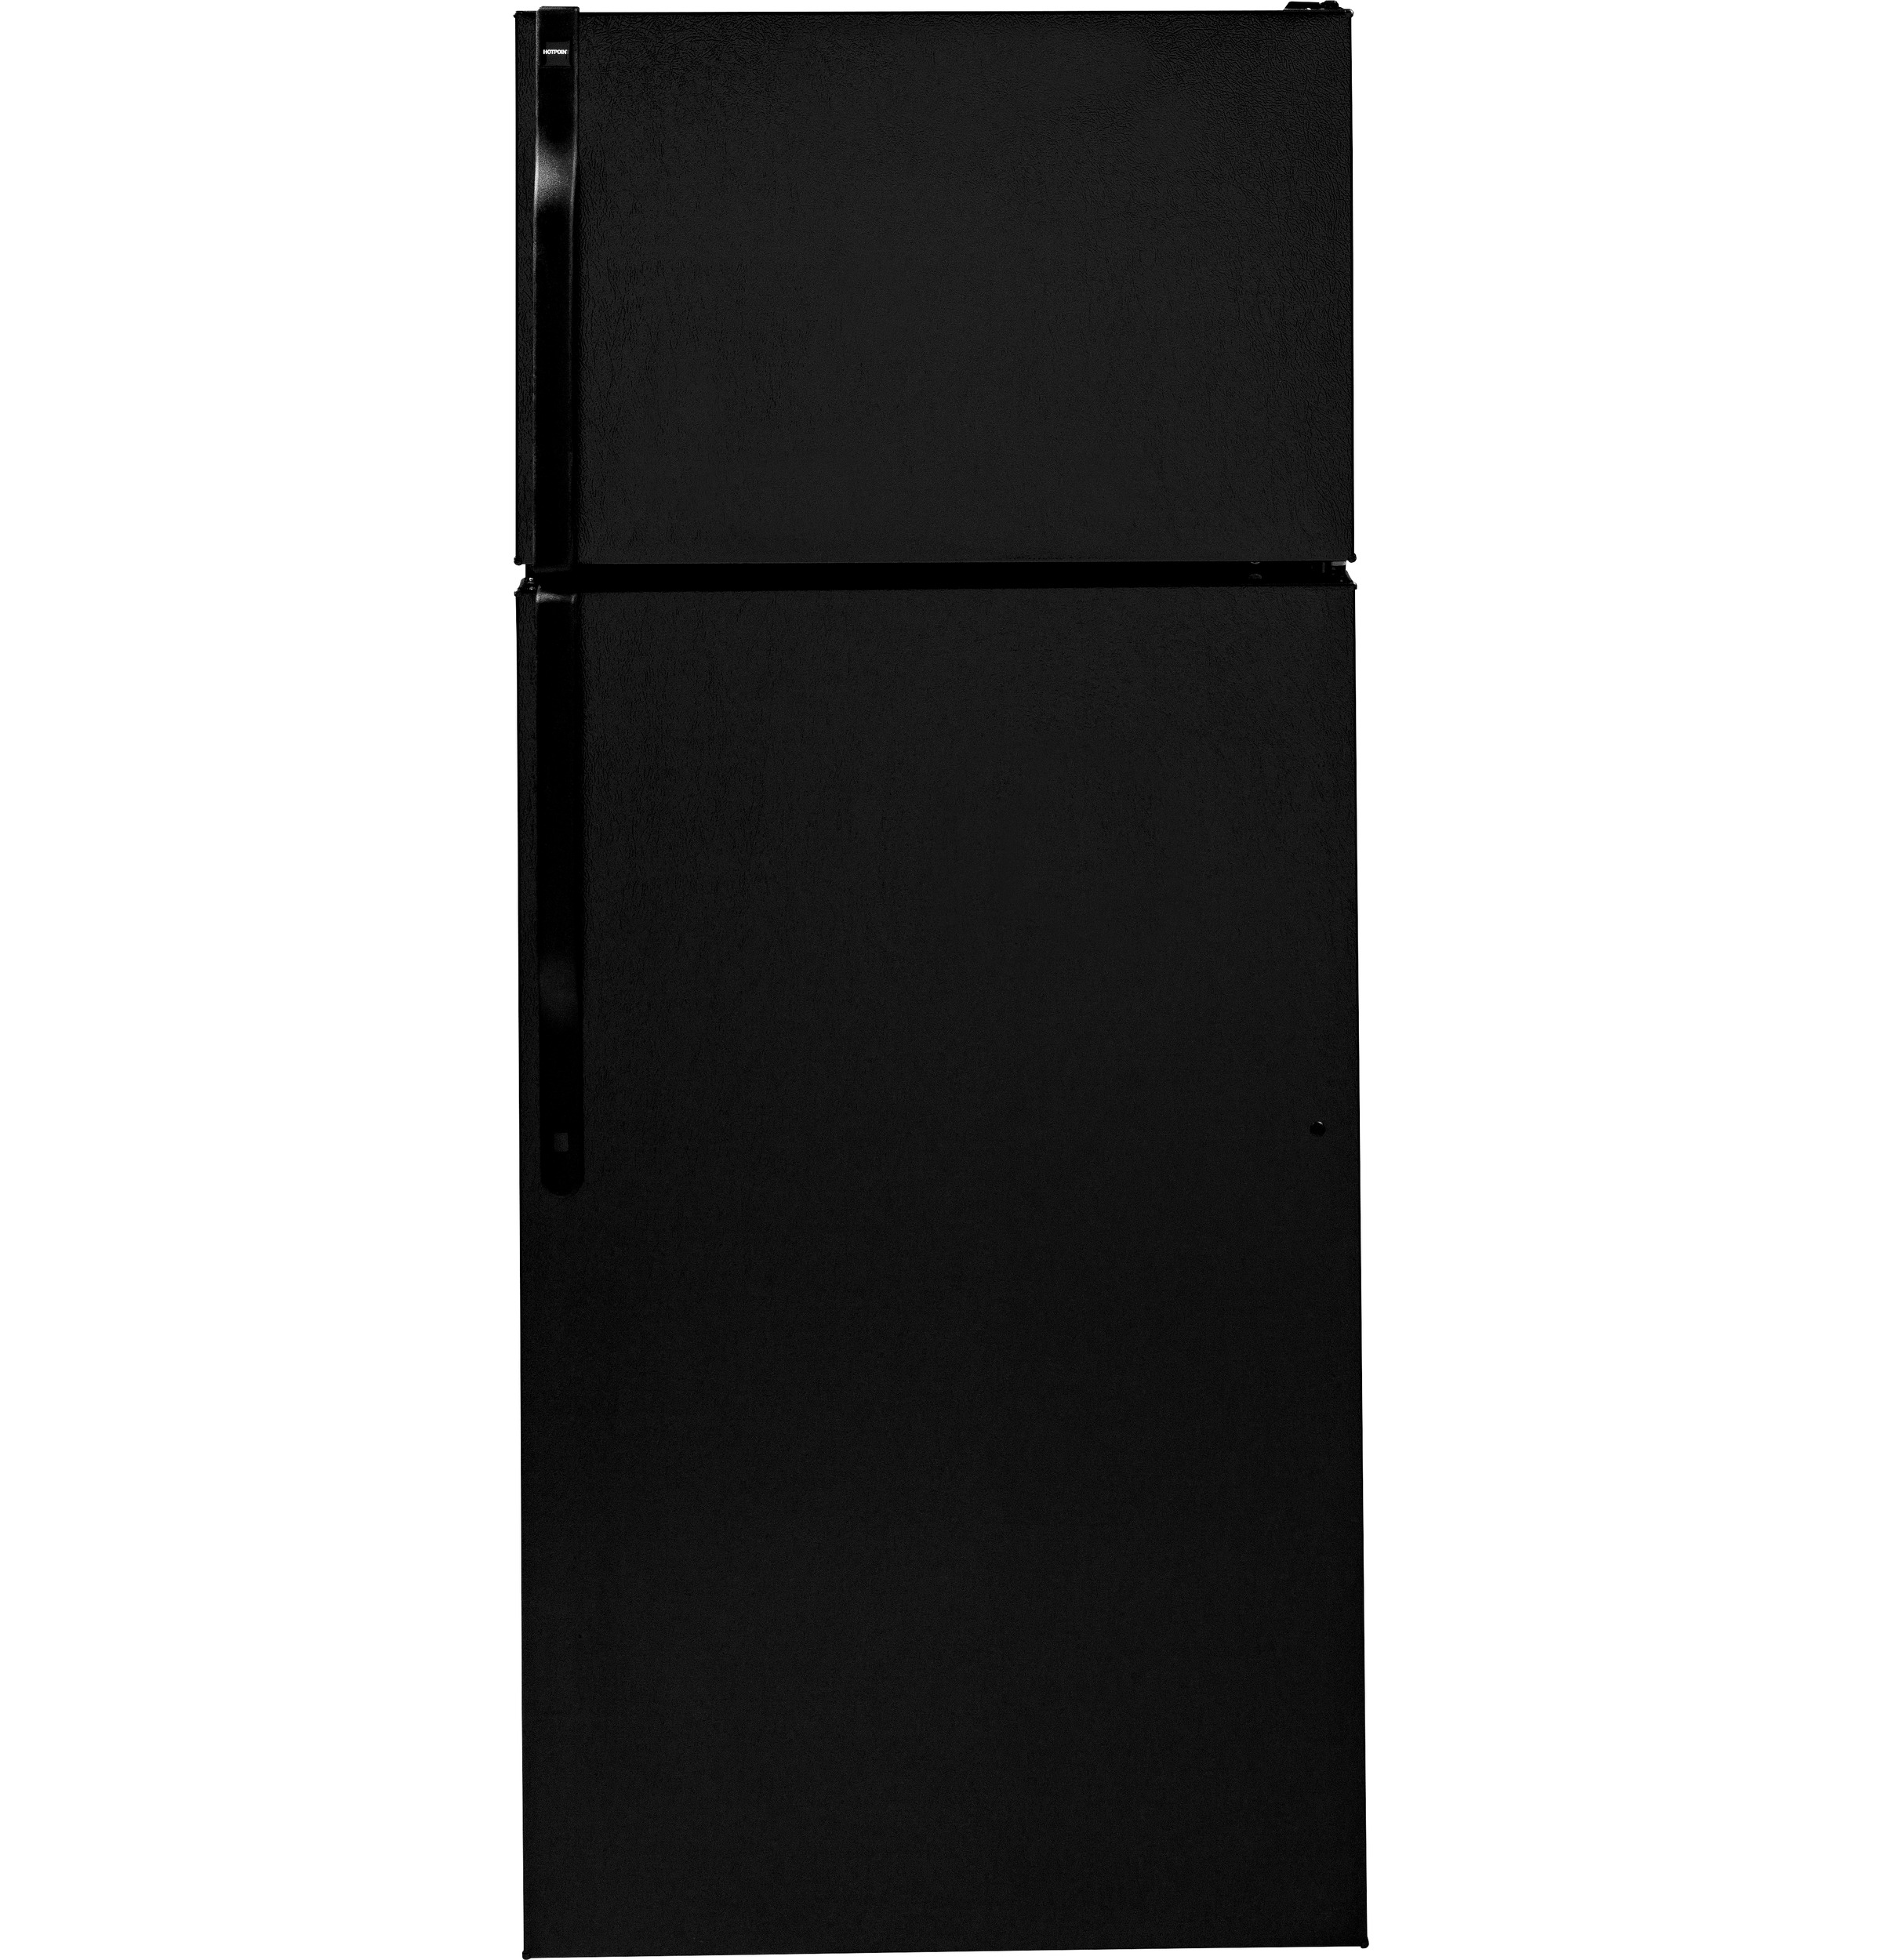 Hotpoint® 18.1 Cu. Ft. Top-Freezer Refrigerator